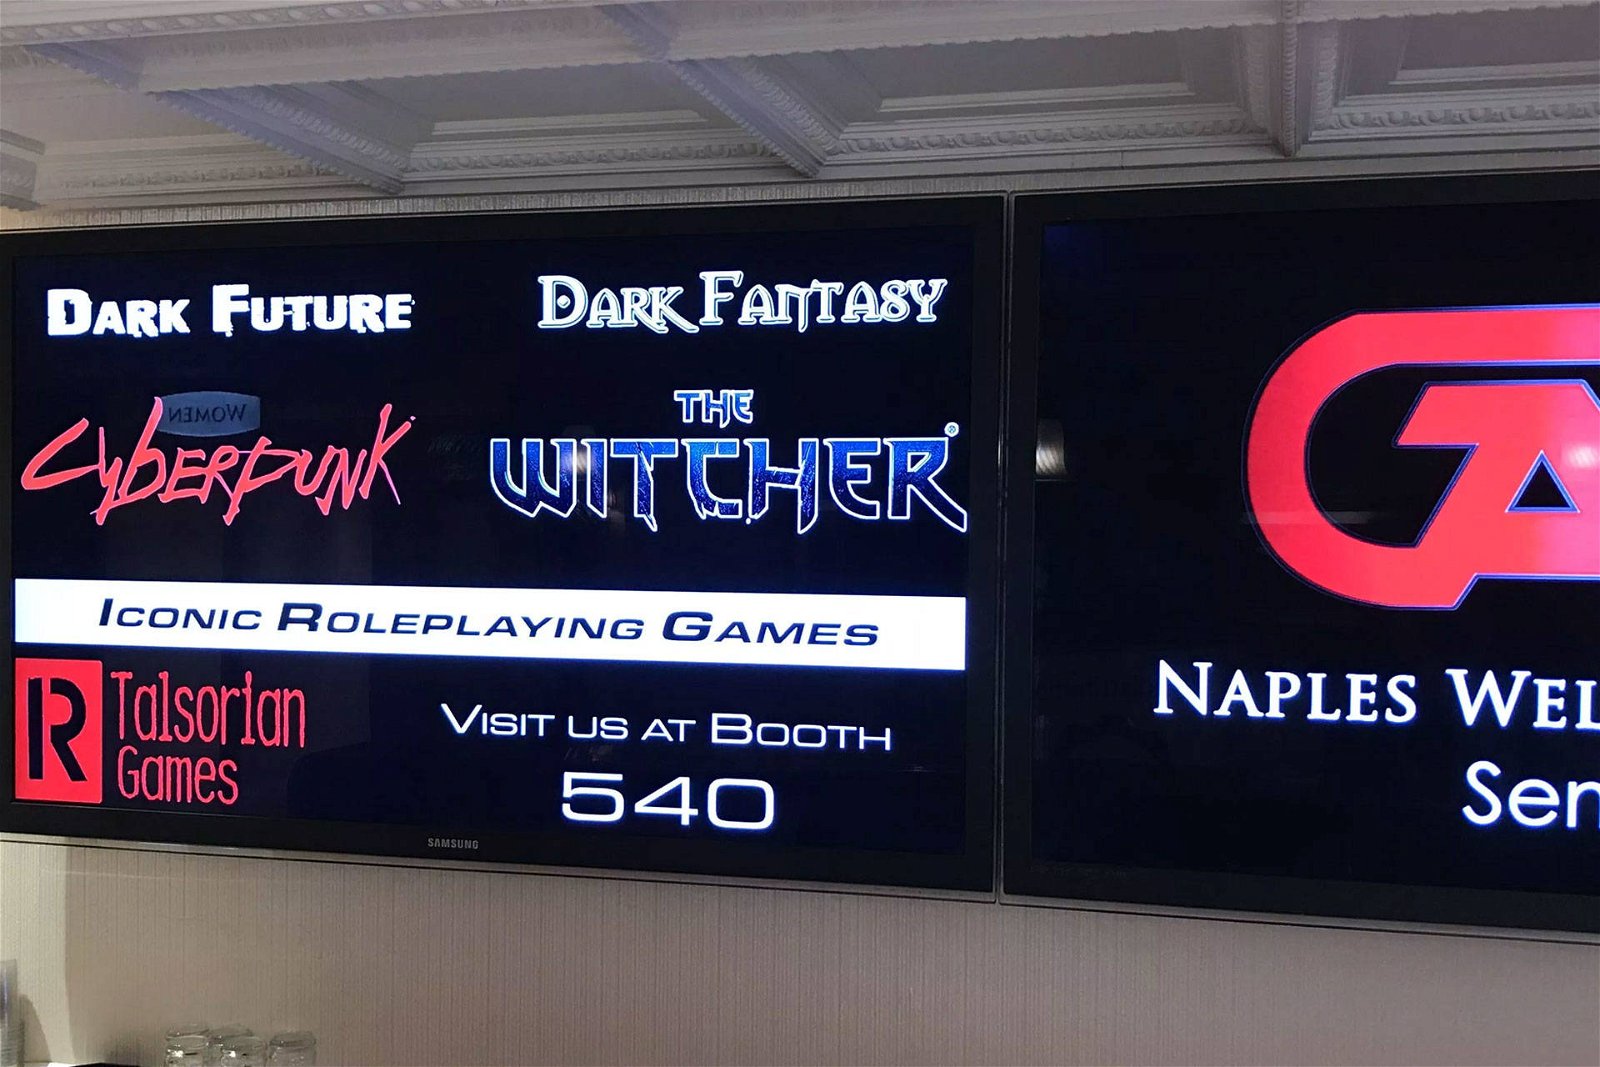 Immagine di R Talsorian Games: novità per The Witcher e Cyberpunk 2020